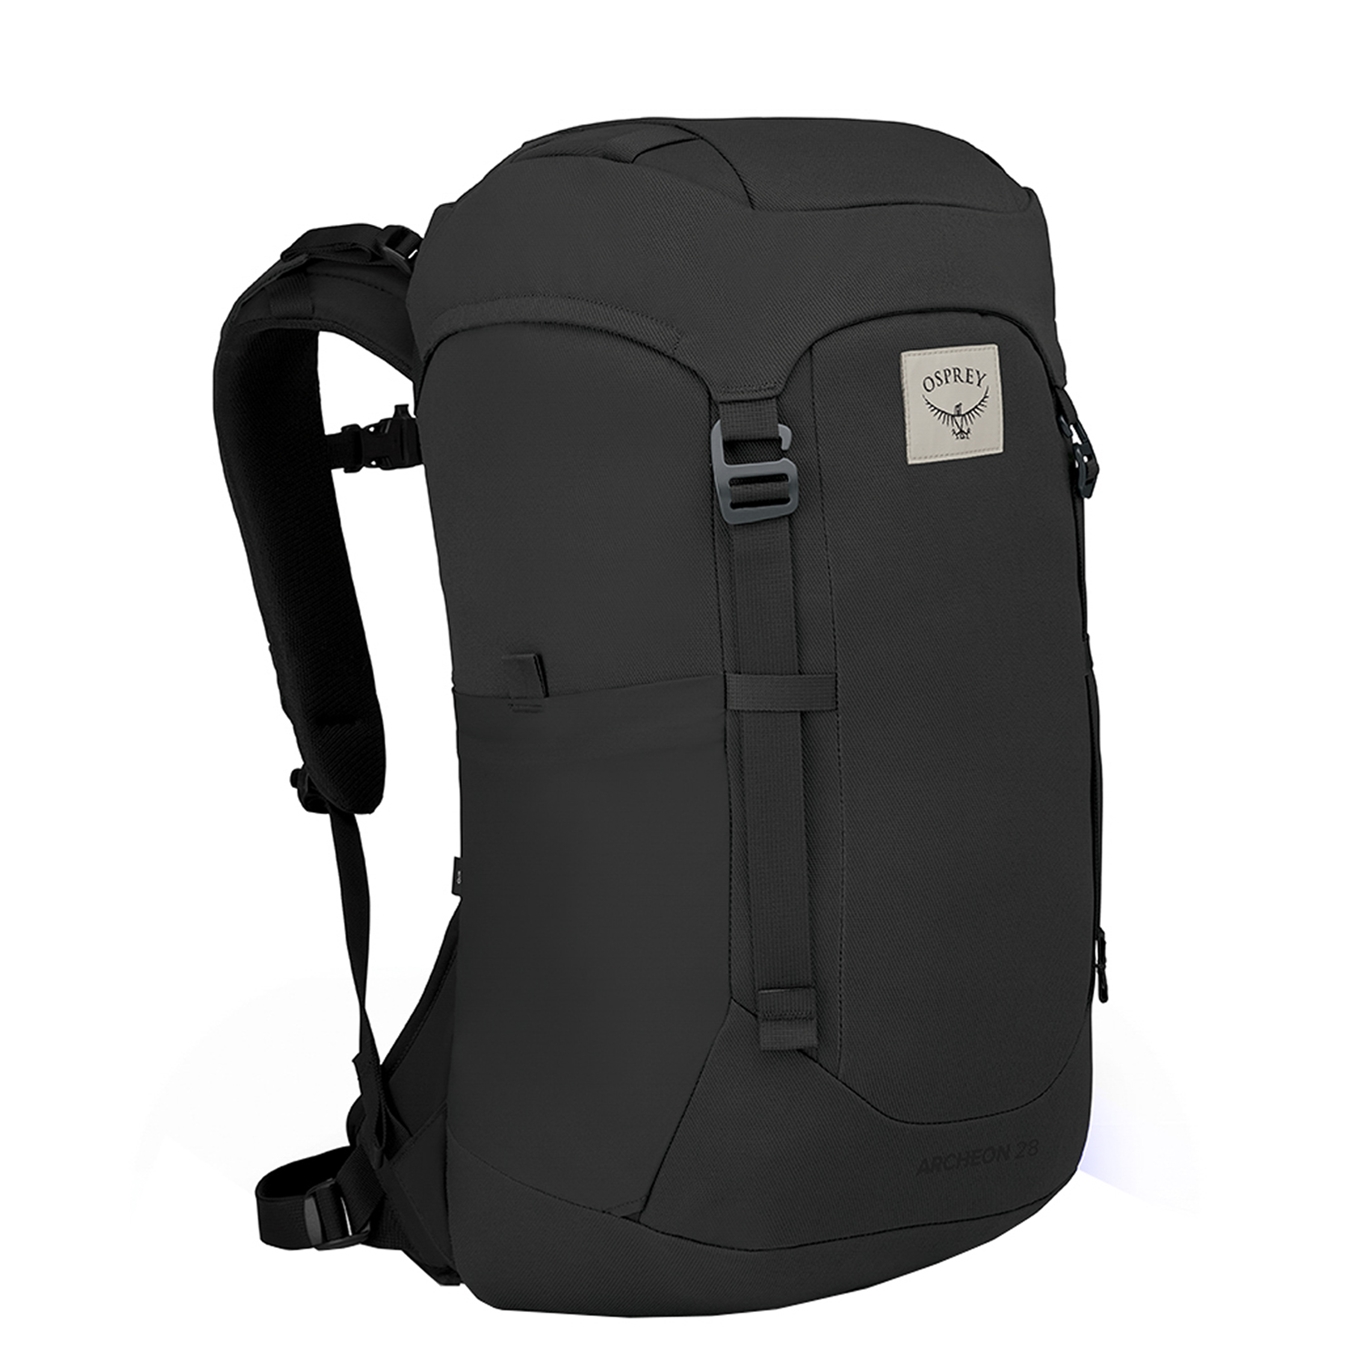 Osprey Archeon 28 Backpack stonewash black backpack